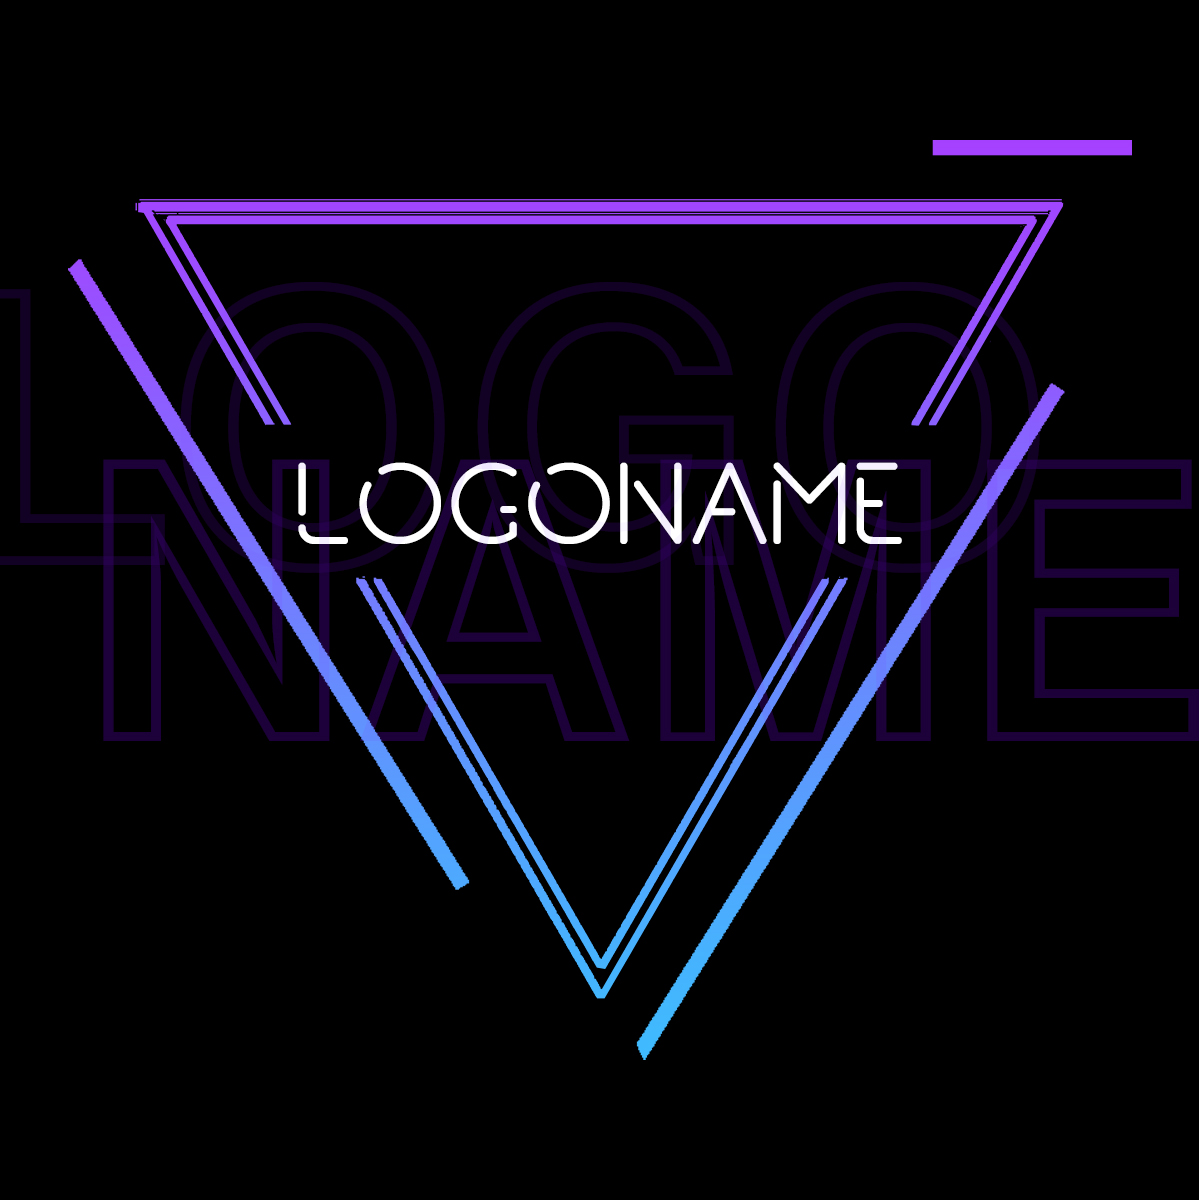 Logo: Neon triangle